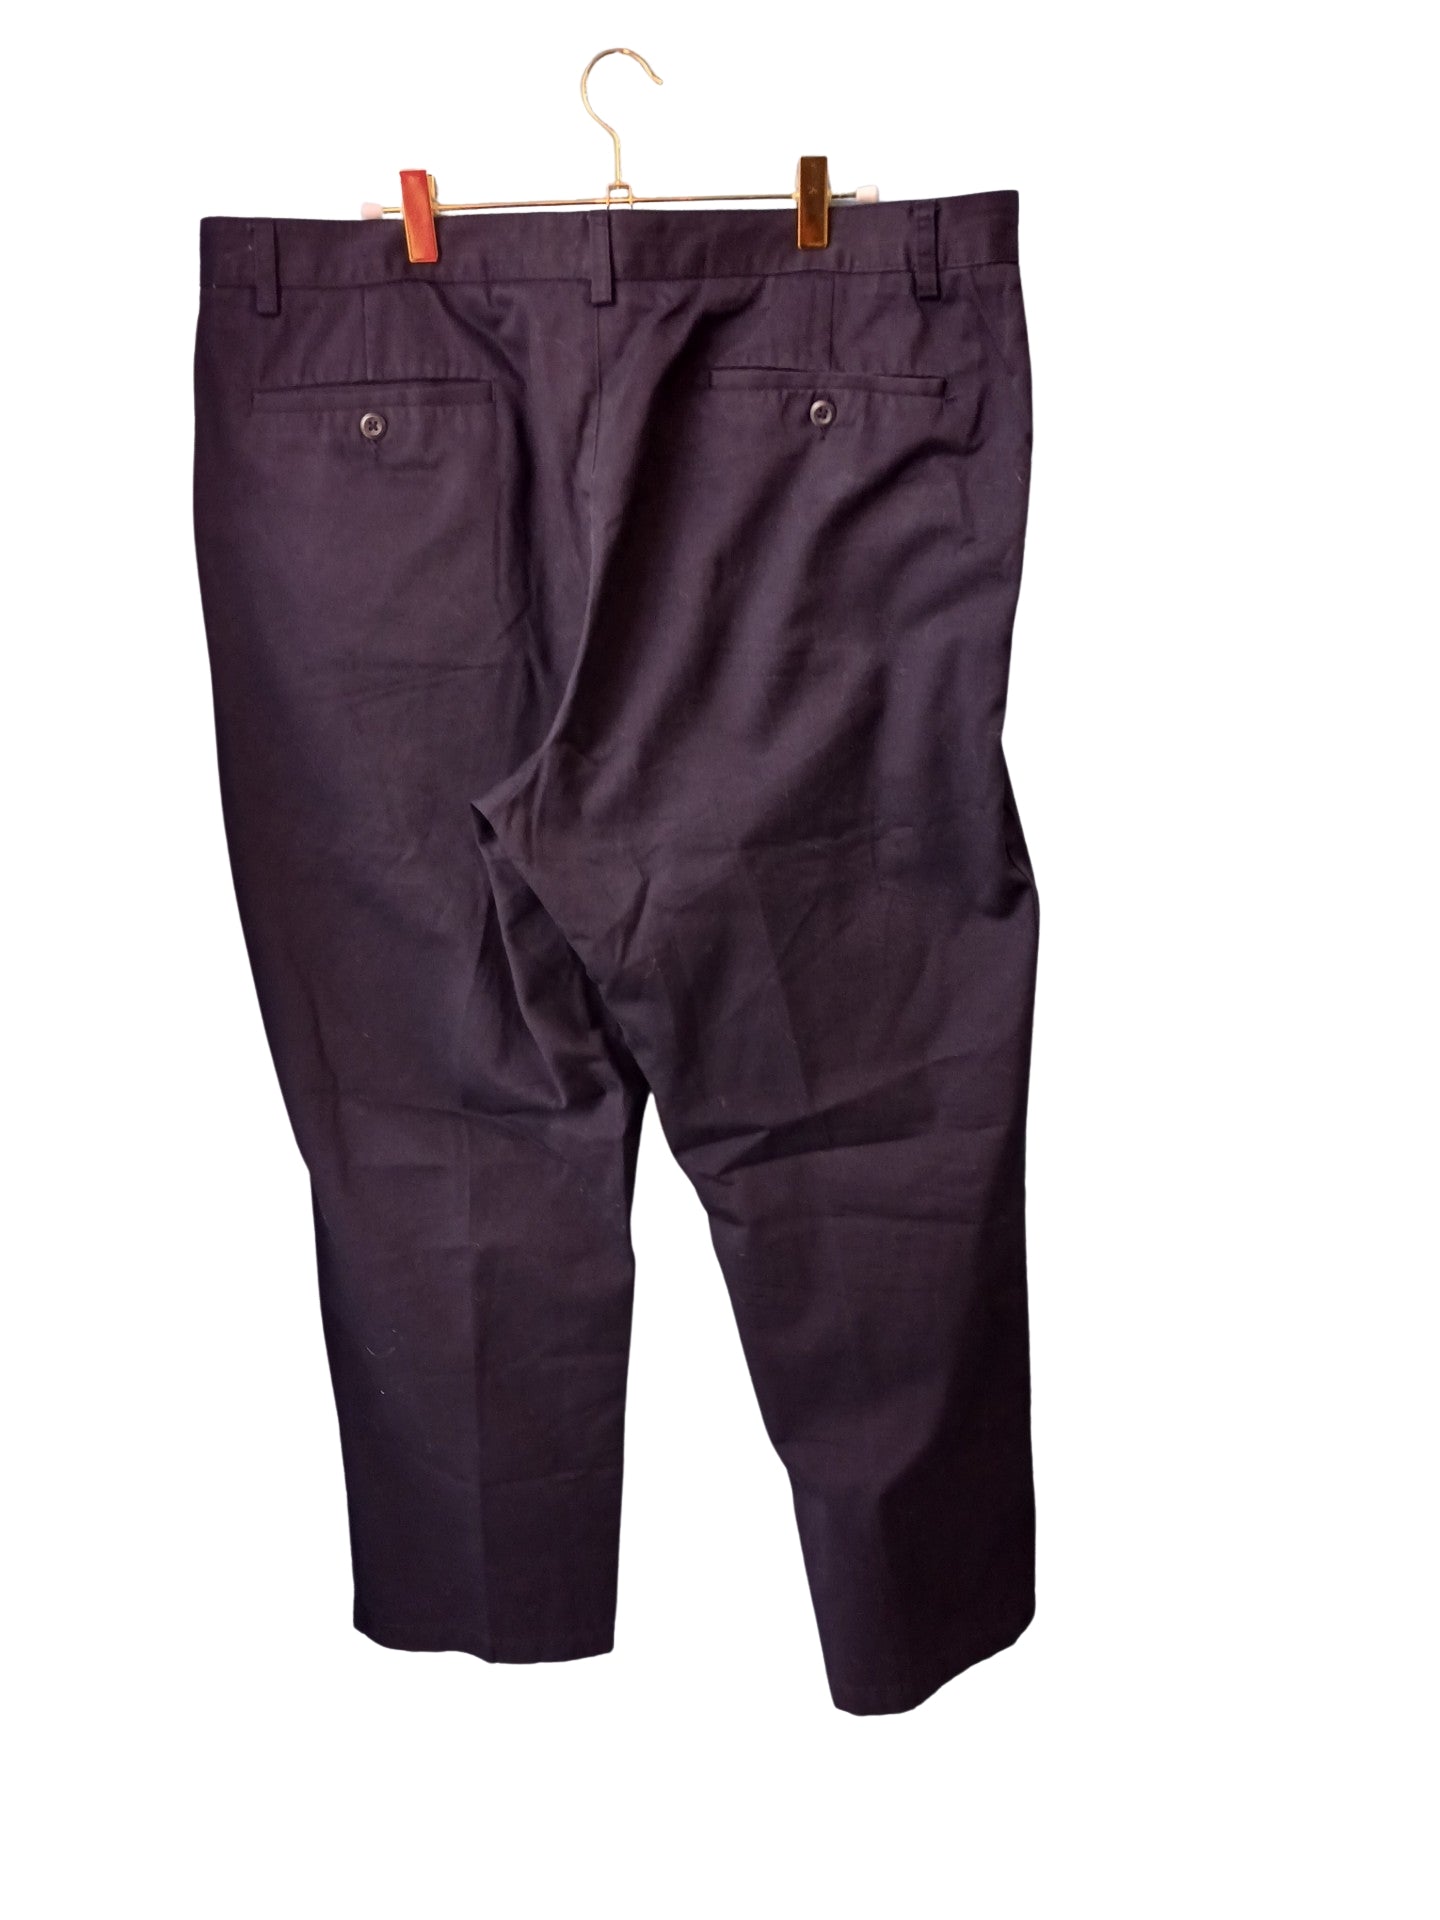 John Ashford Navy Blue Pants, Size 38×30